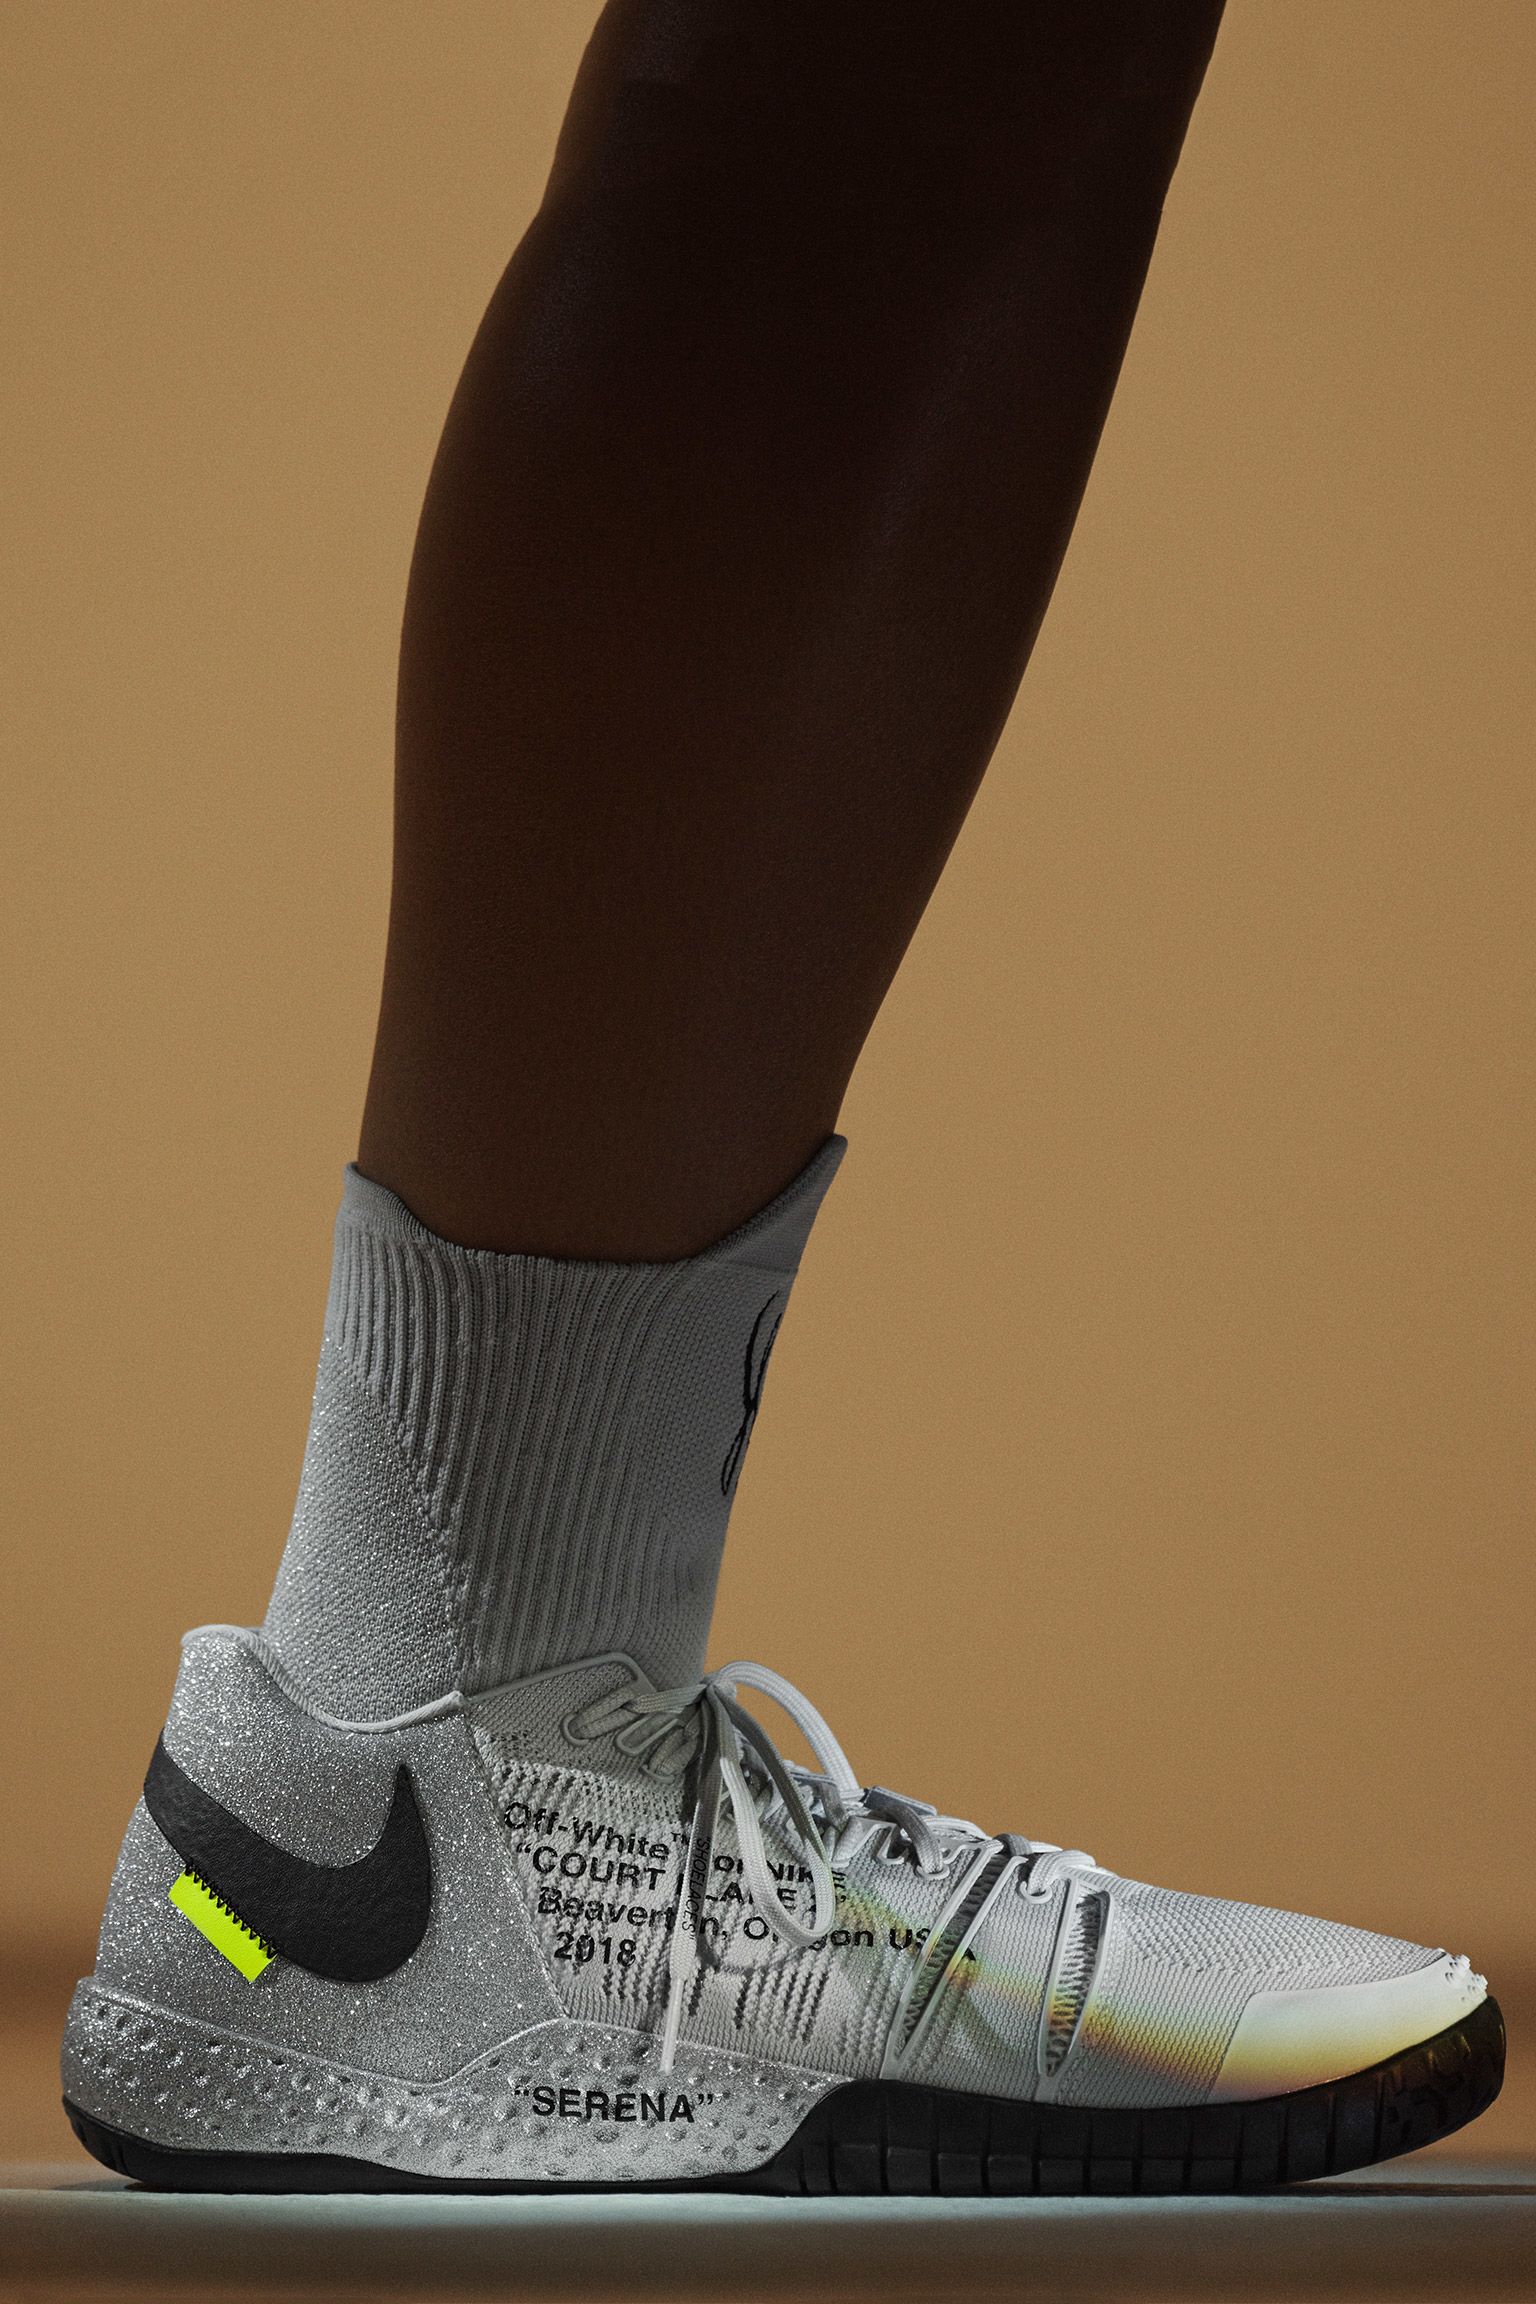 Nike x Virgil Abloh for Serena Williams: "Queen" Colelction. SNKRS